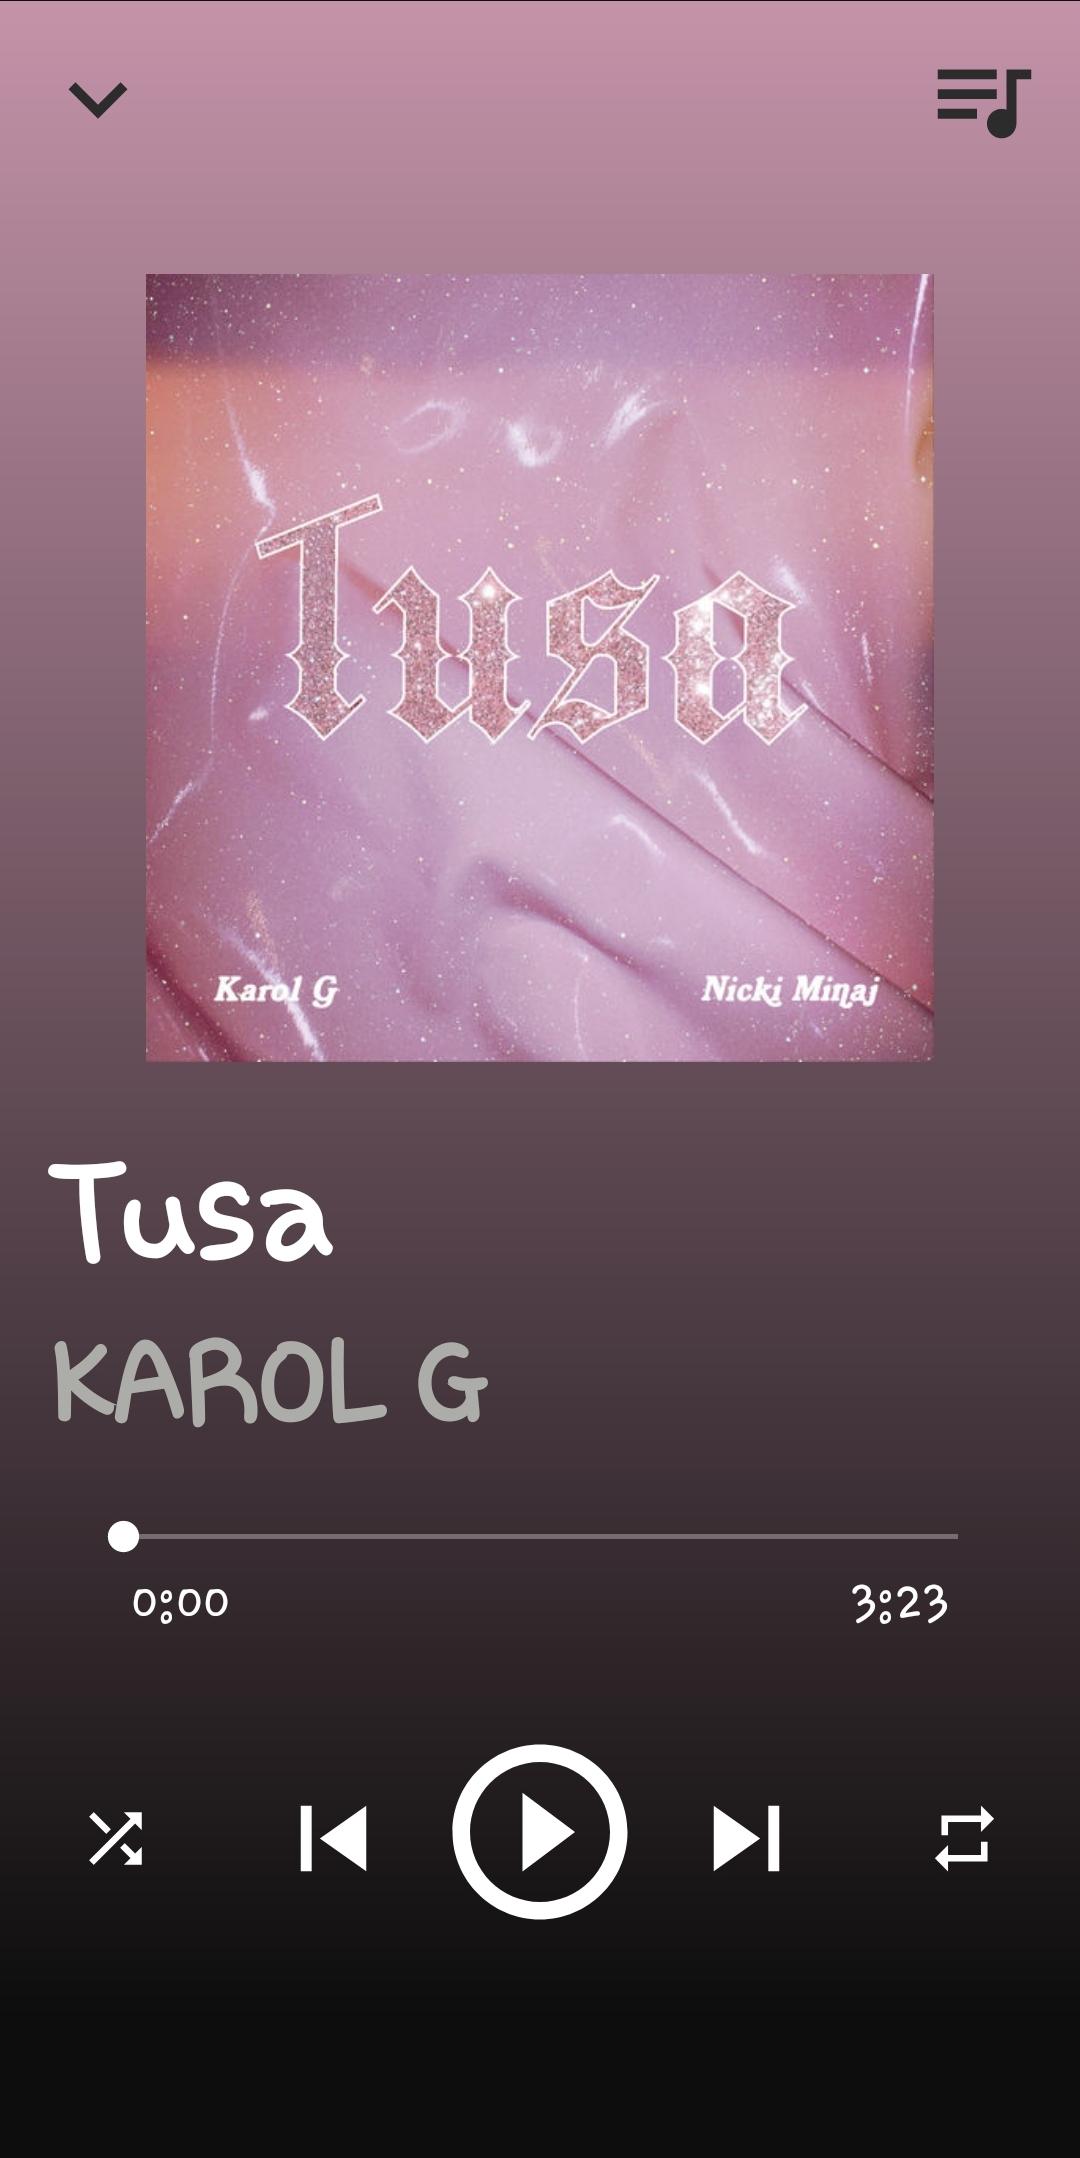 Descarga de APK de KAROL G, Nicki Minaj - Tusa - Yeezy Music para Android